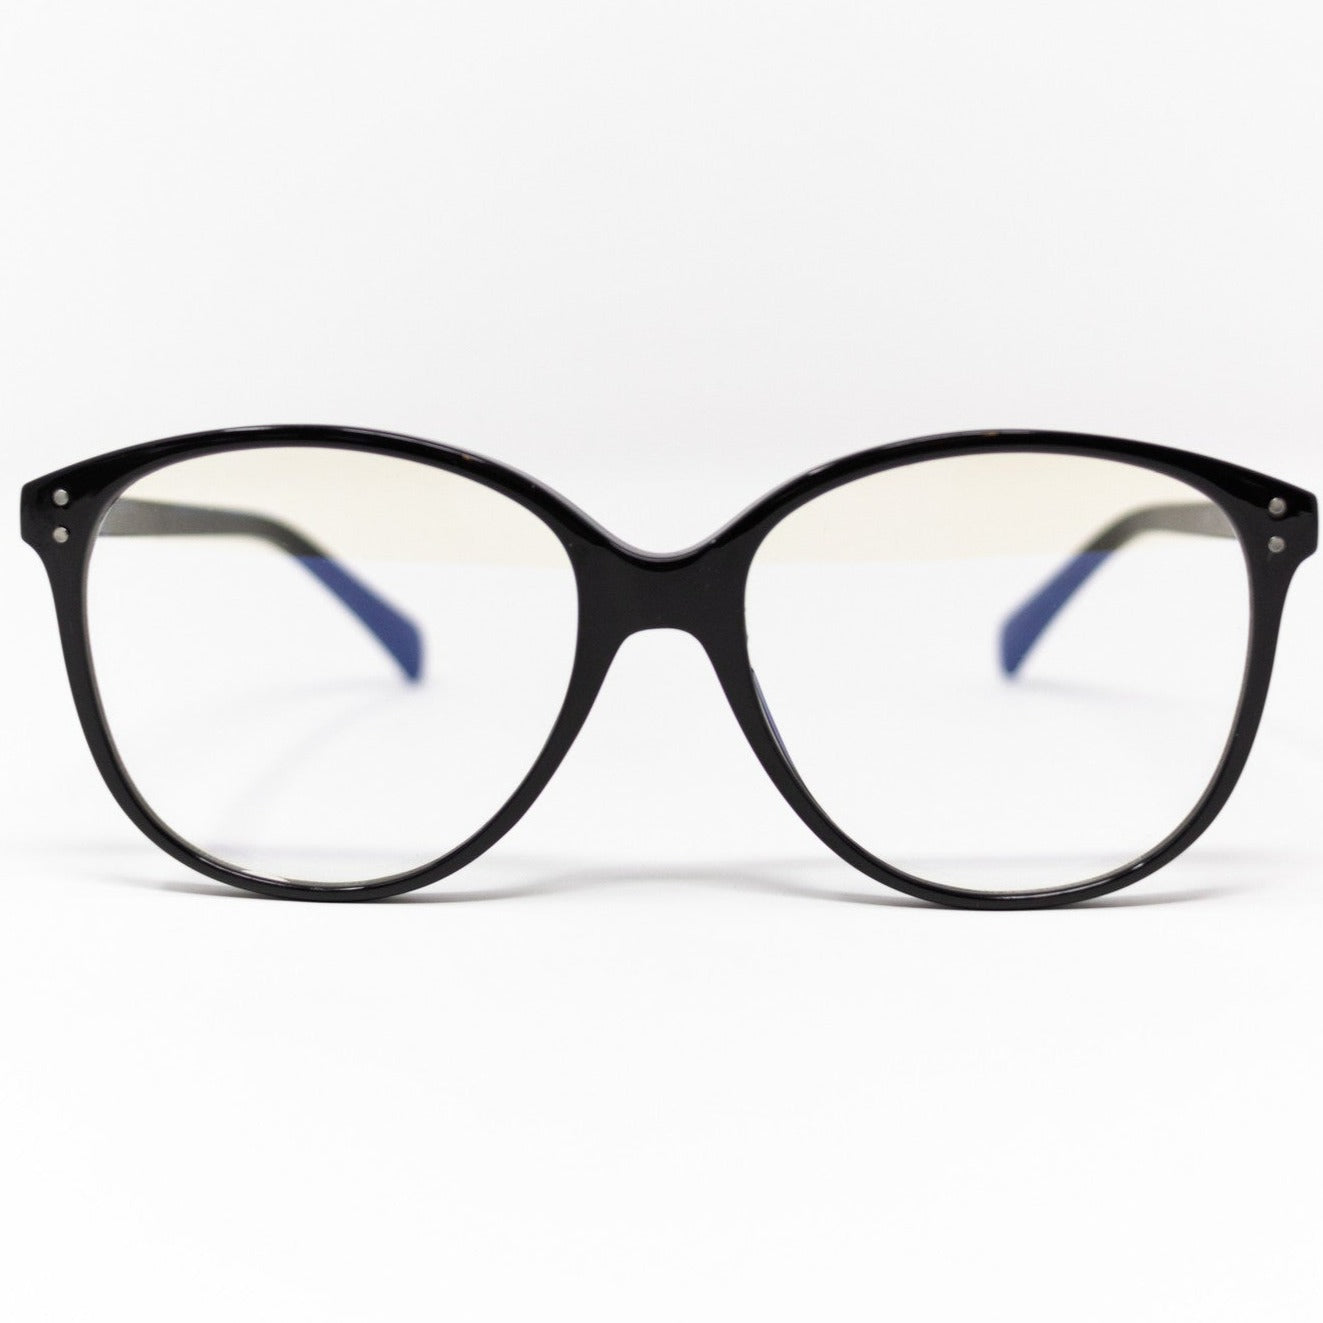 Cairns Blue Light Glasses - Black